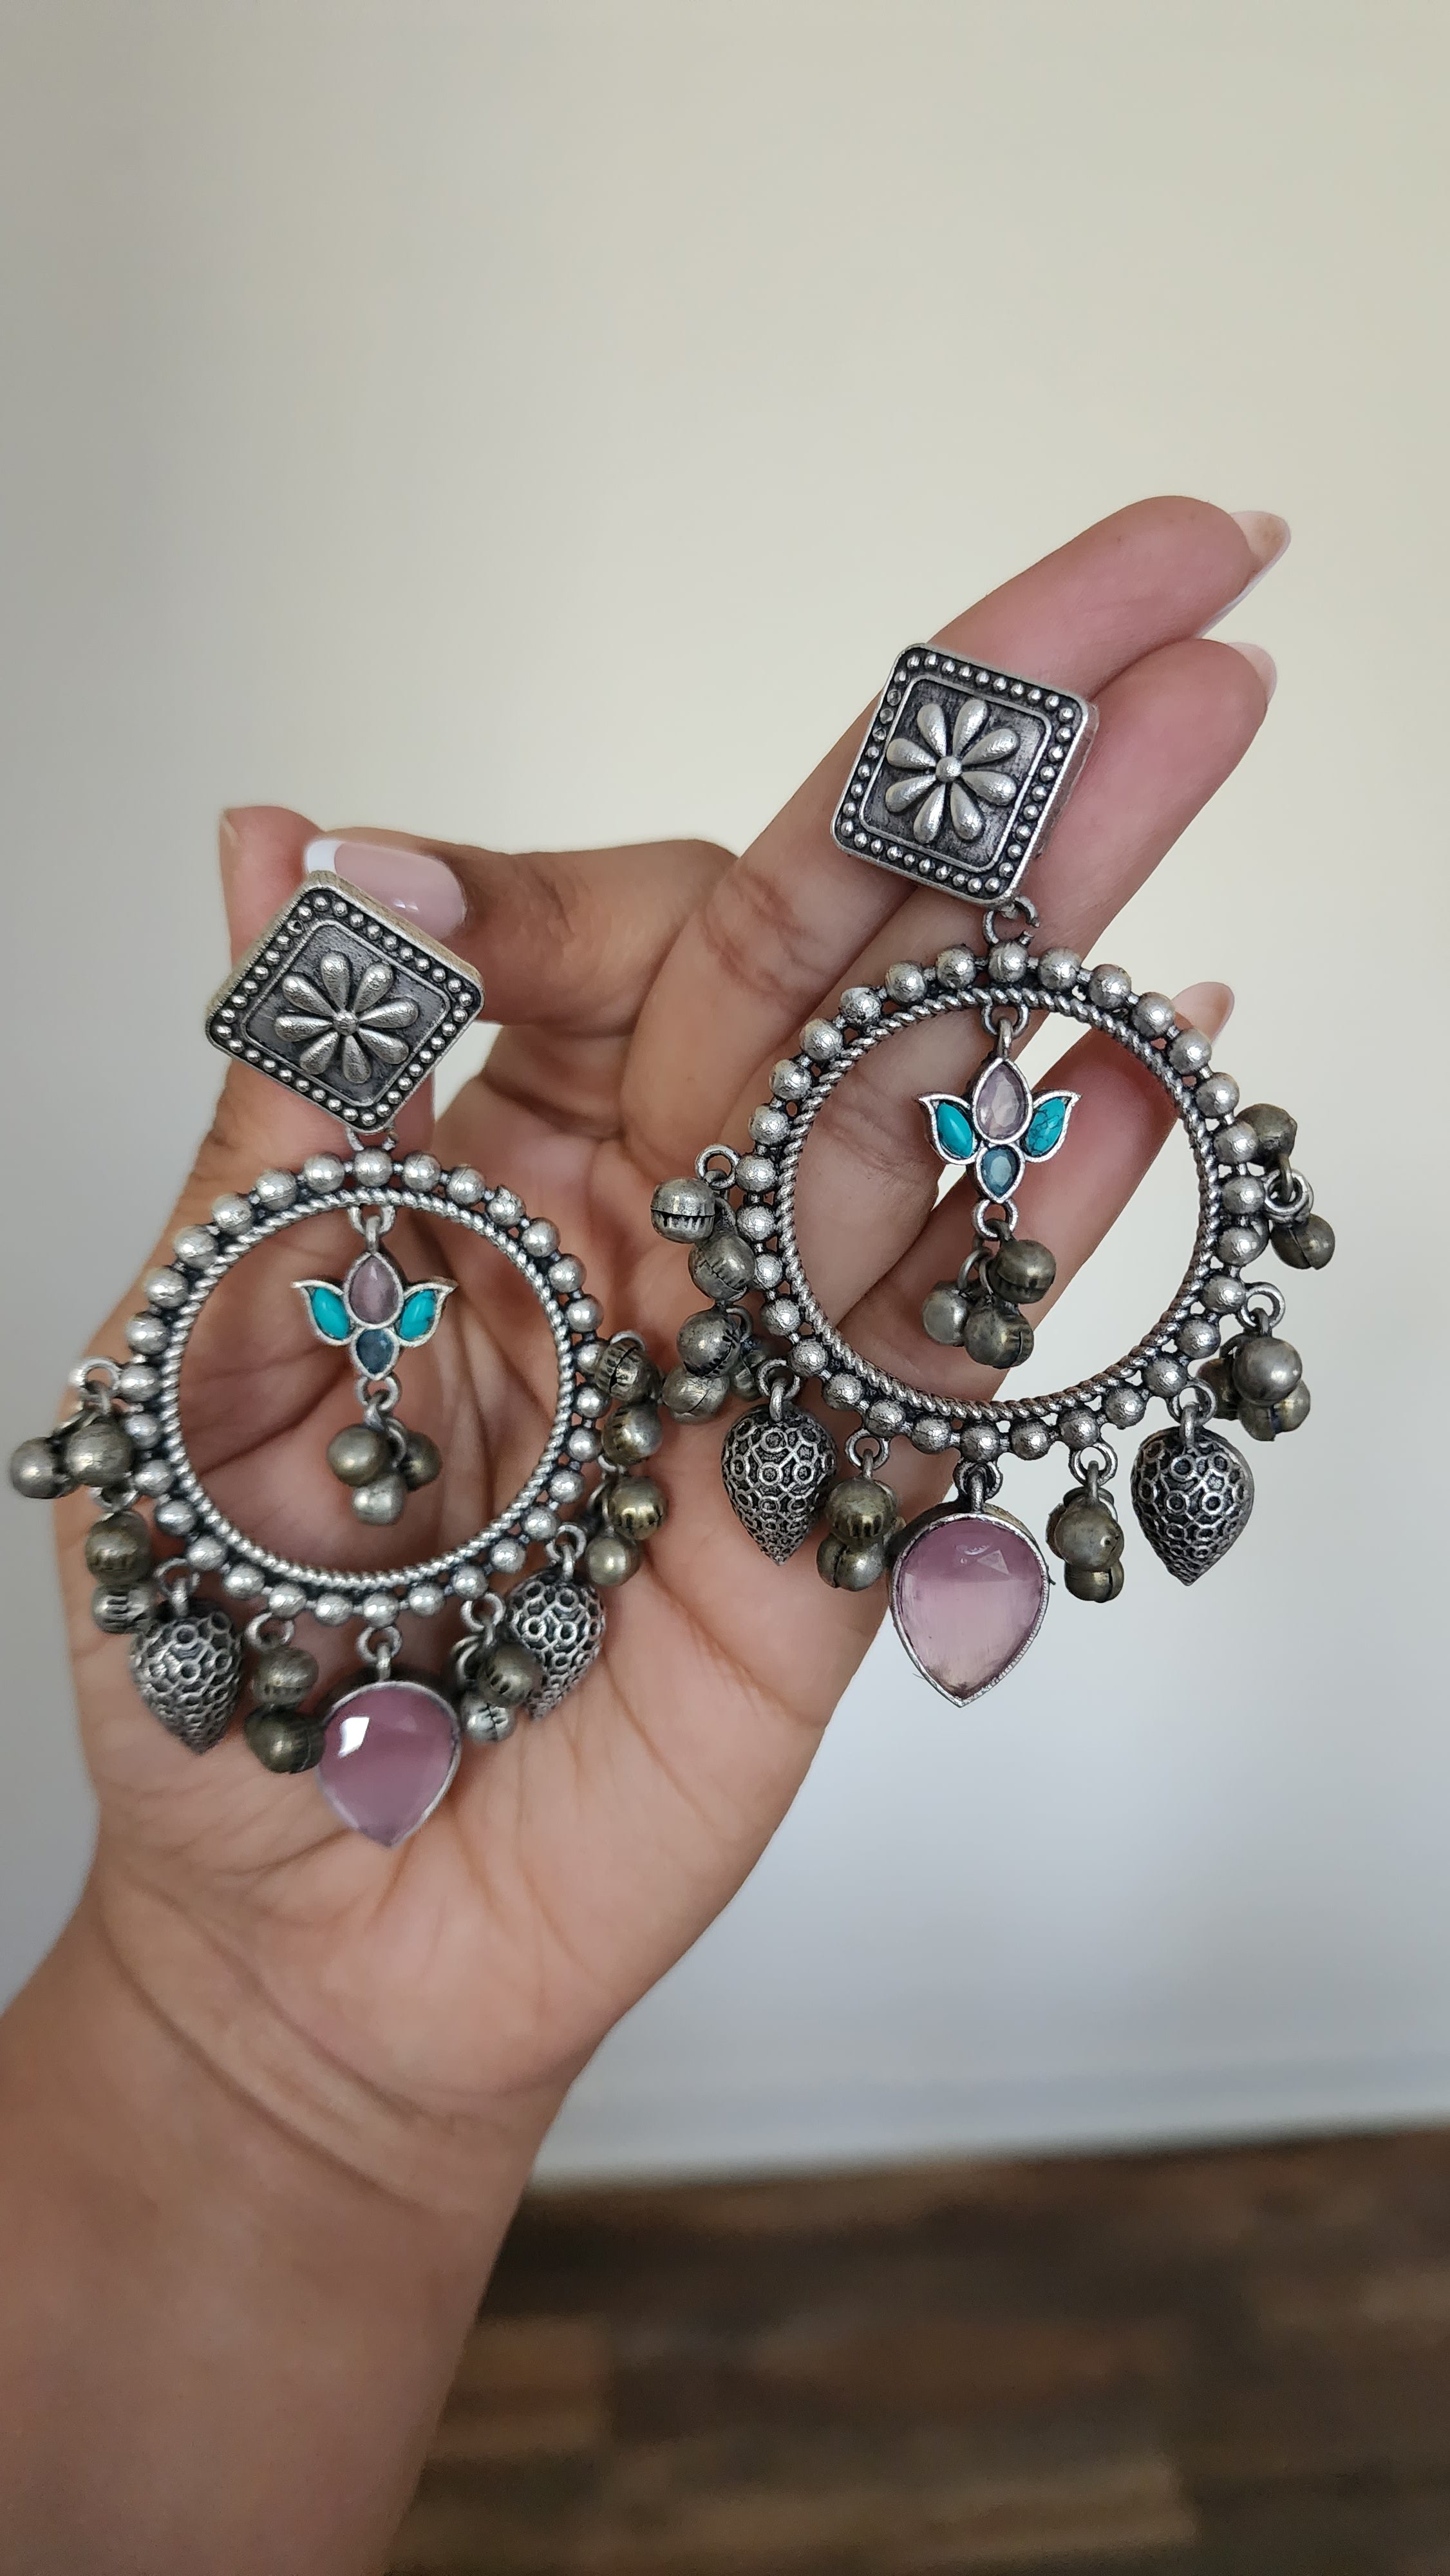 Varni fusion silver alike earrings